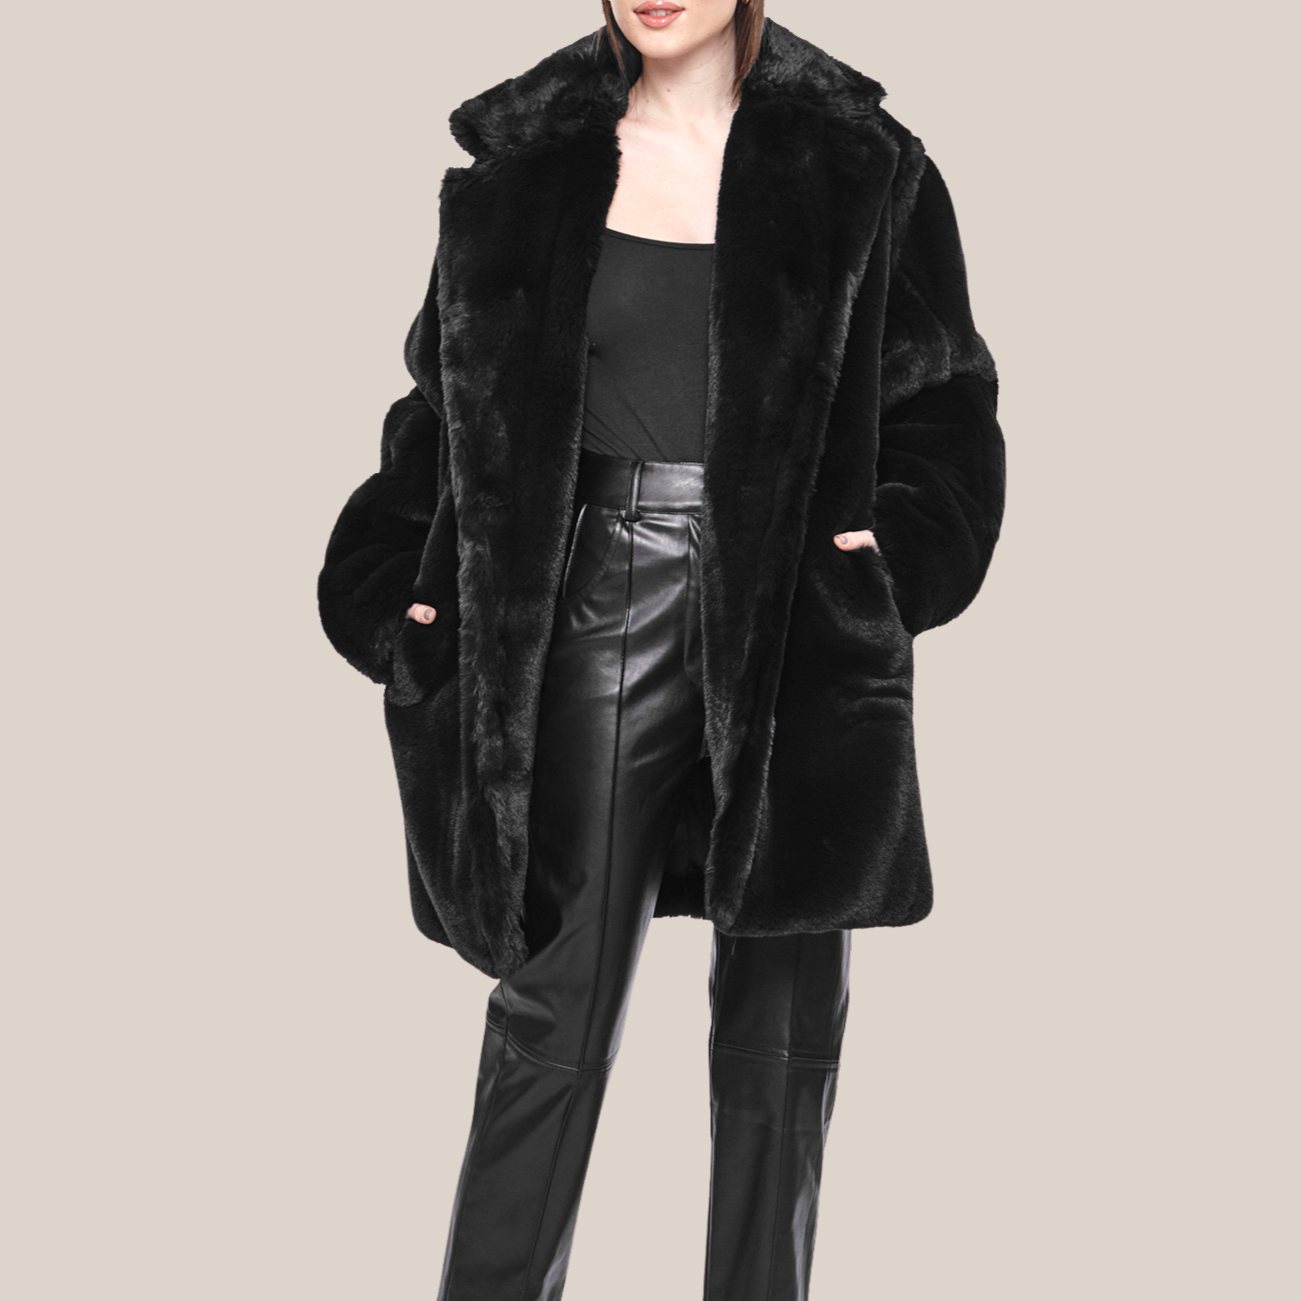 Gotstyle Fashion - Hilary MacMillan Coats Luxe Faux Fur Mid-Length Teddy Coat - Black